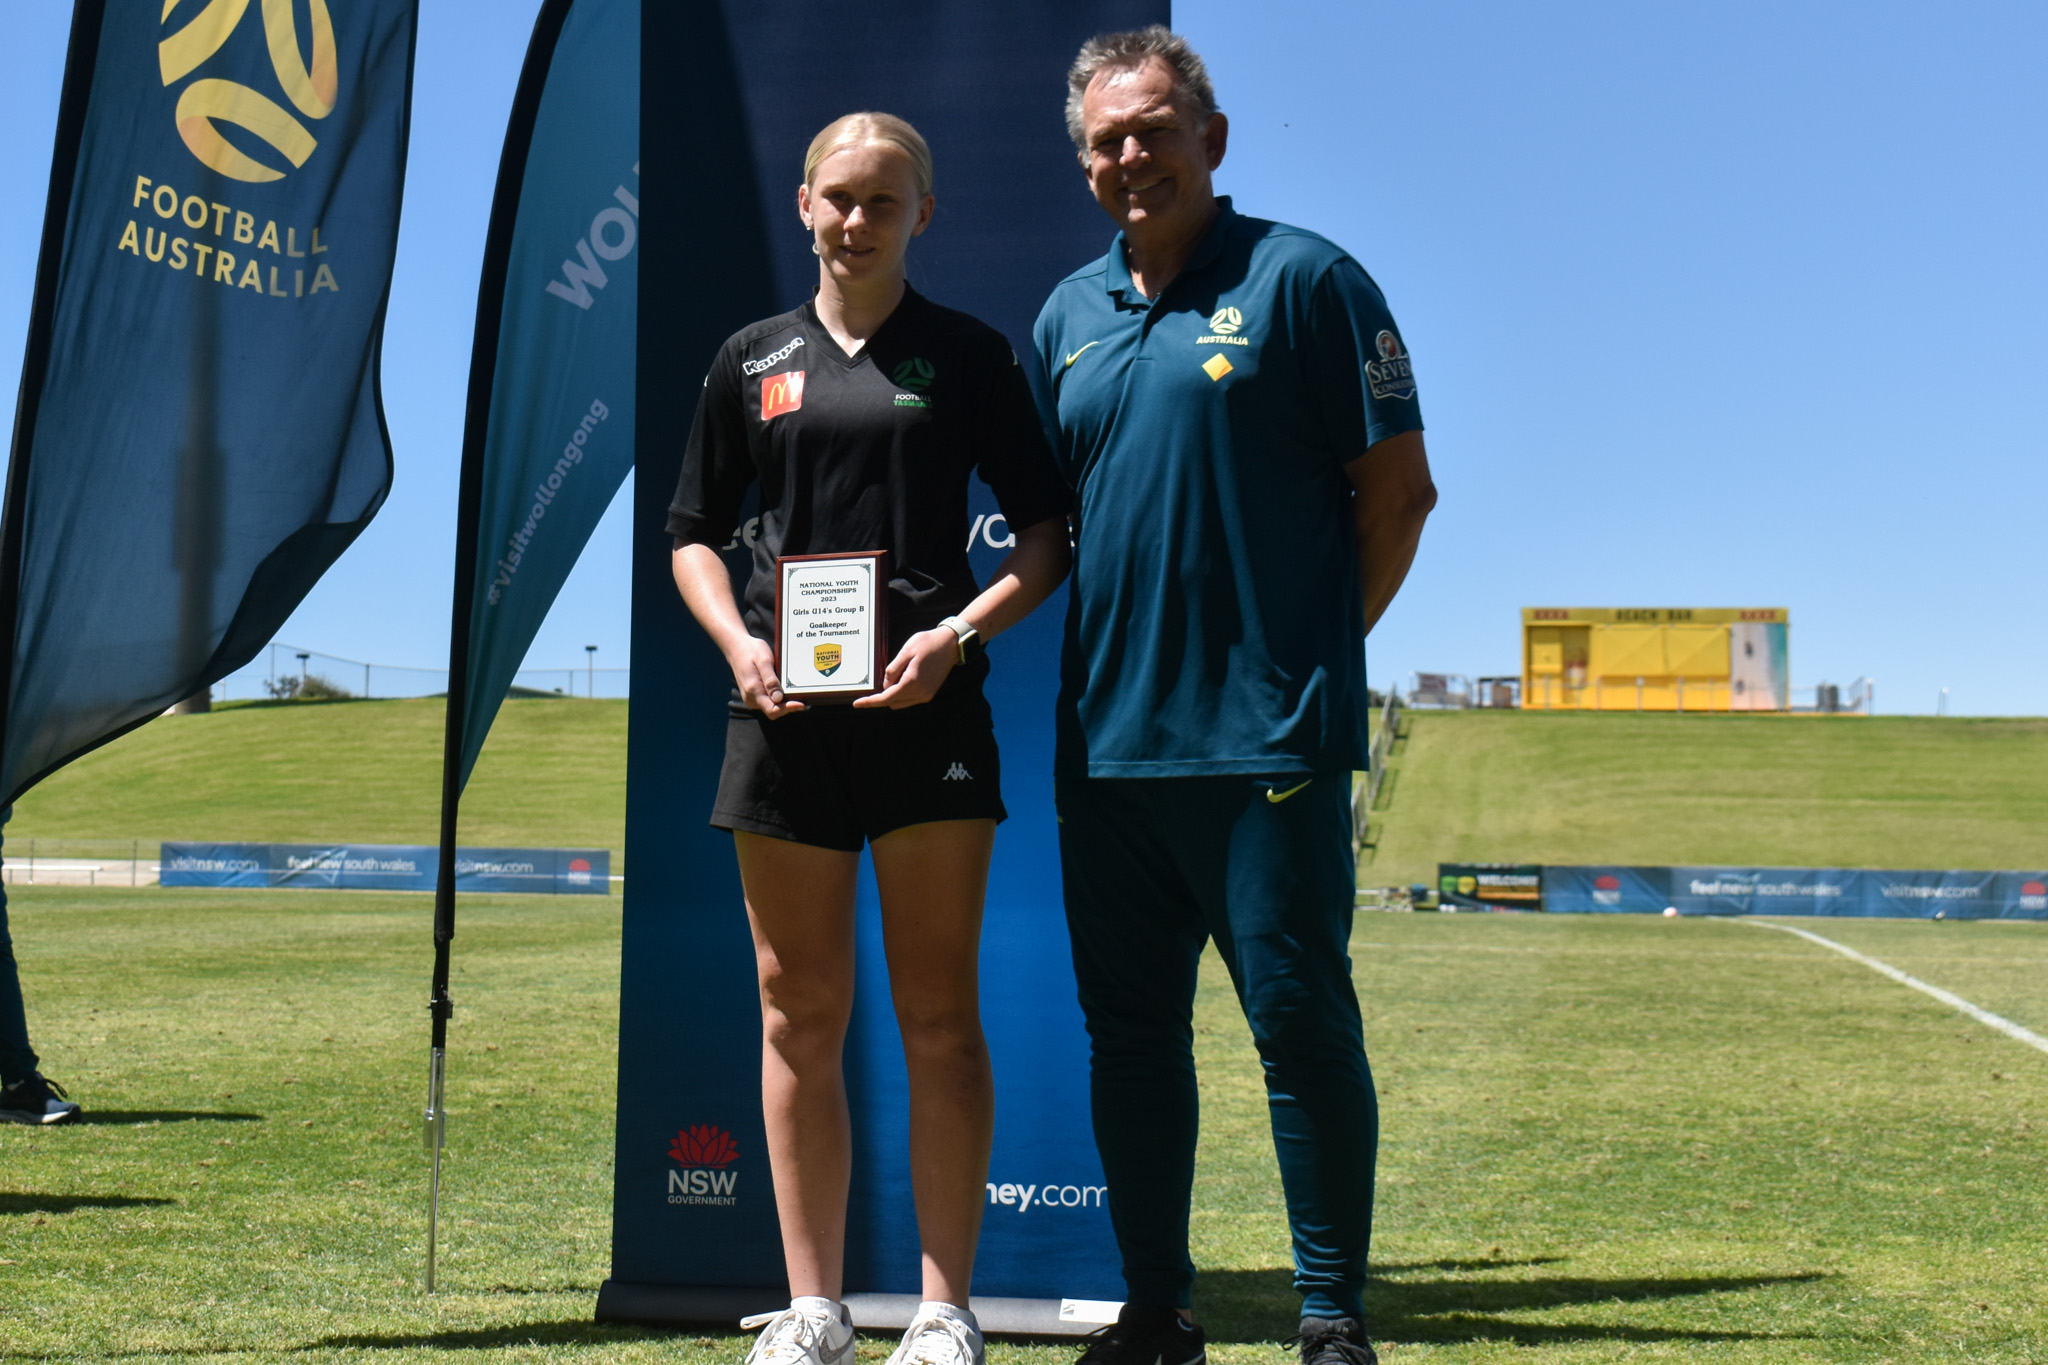 Amalie Miller from Football Tasmania was presented with the Under 14B Goalkeeper of the Tournament award from Head of Goalkeeping & CommBank Matildas Goalkeeper Coach , Tony Franken.